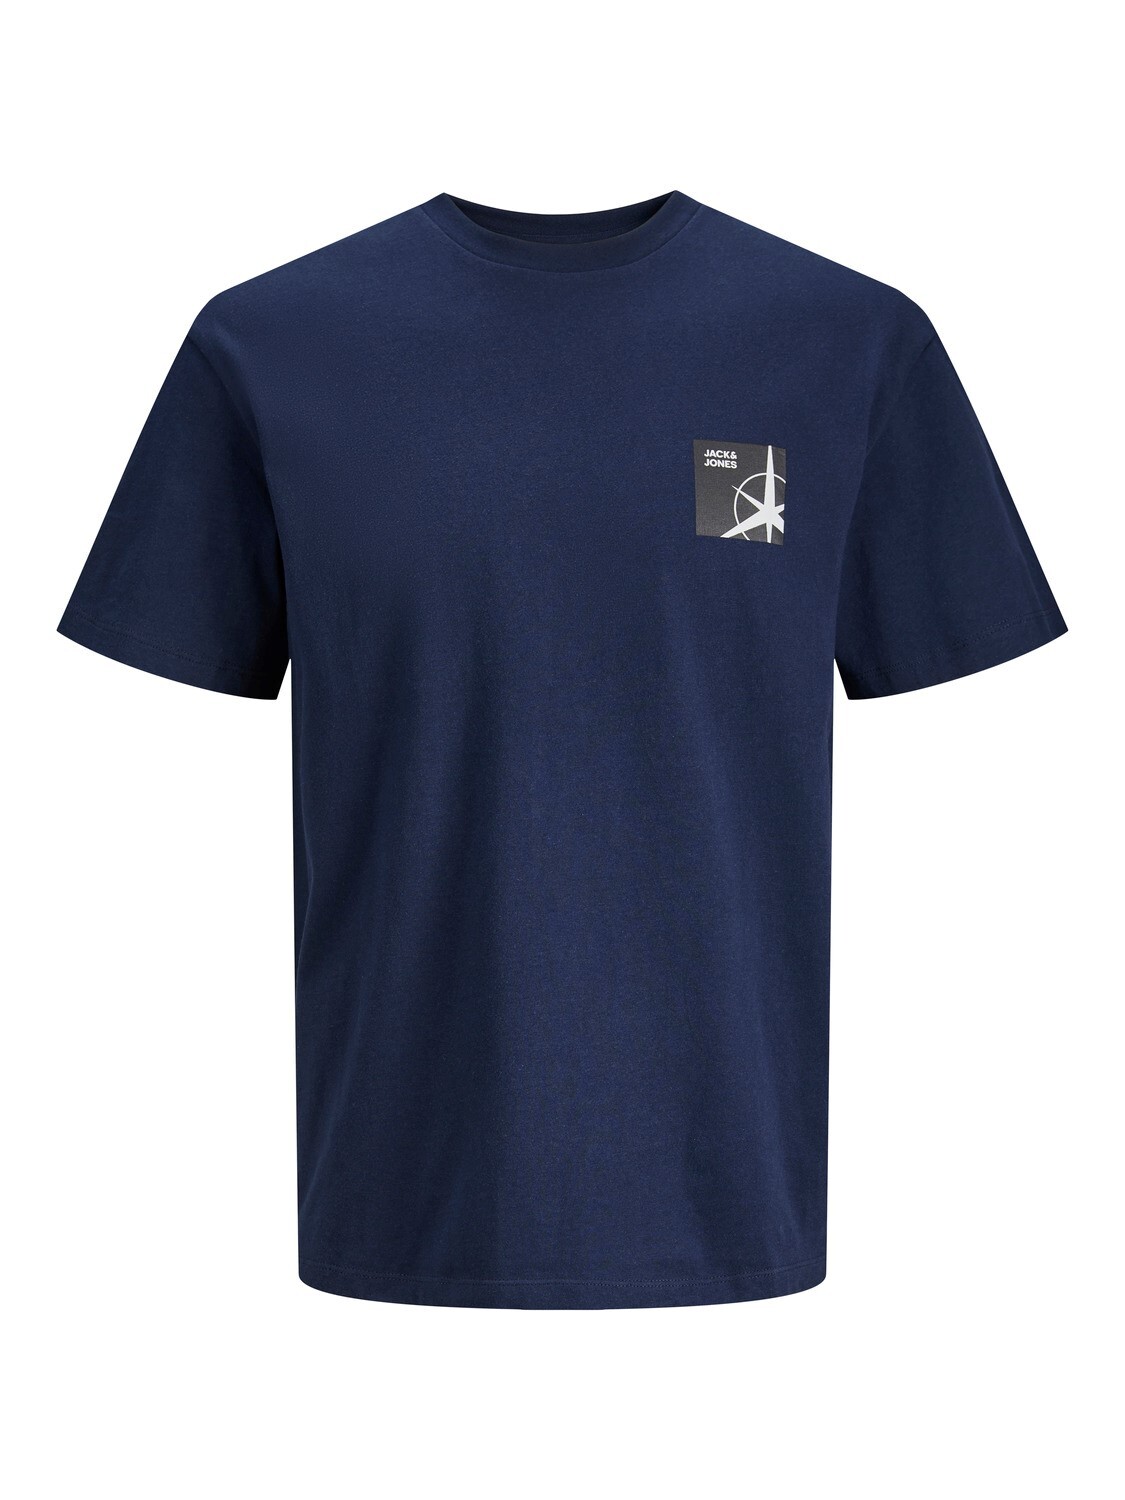 Jack&Jones T-Shirt Navy Blazer/ Blue